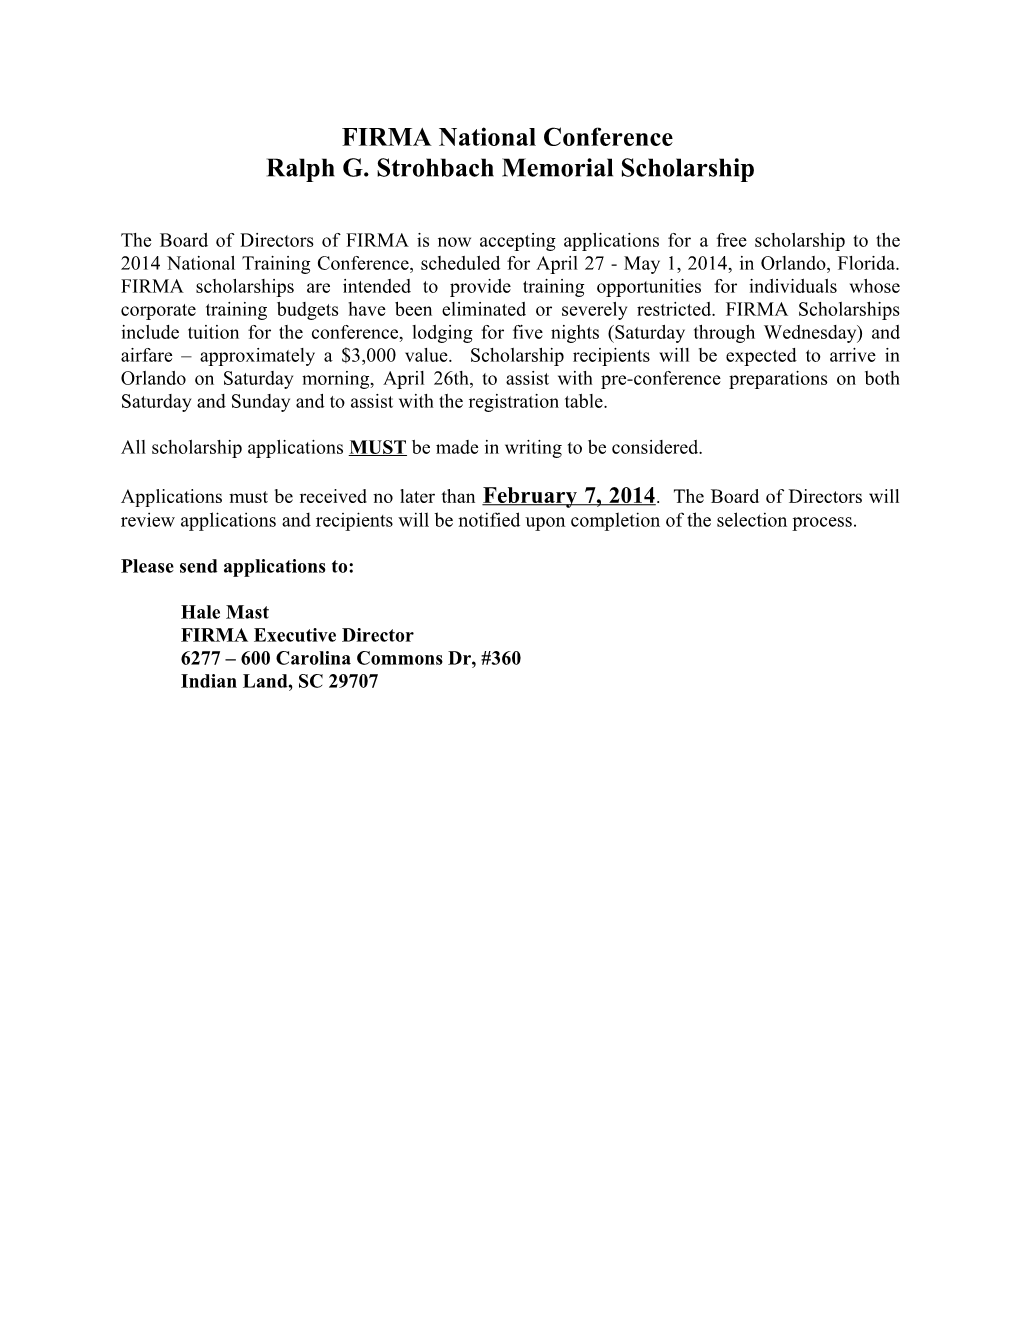 Ralph G. Strohbach Memorial Scholarship